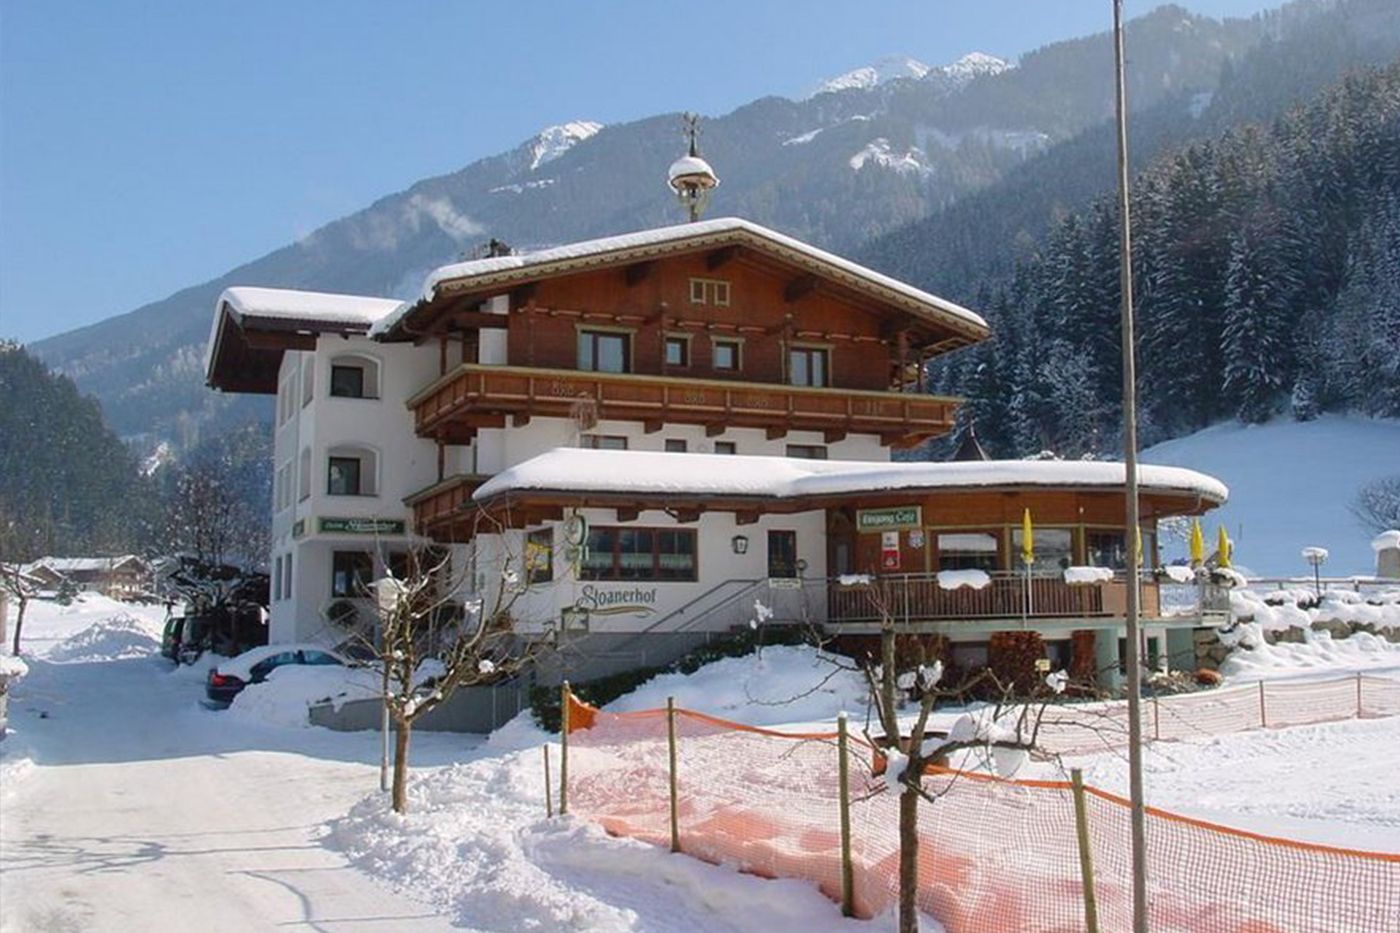 Gasthof Stoanerhof - your inn in Mayrhofen!